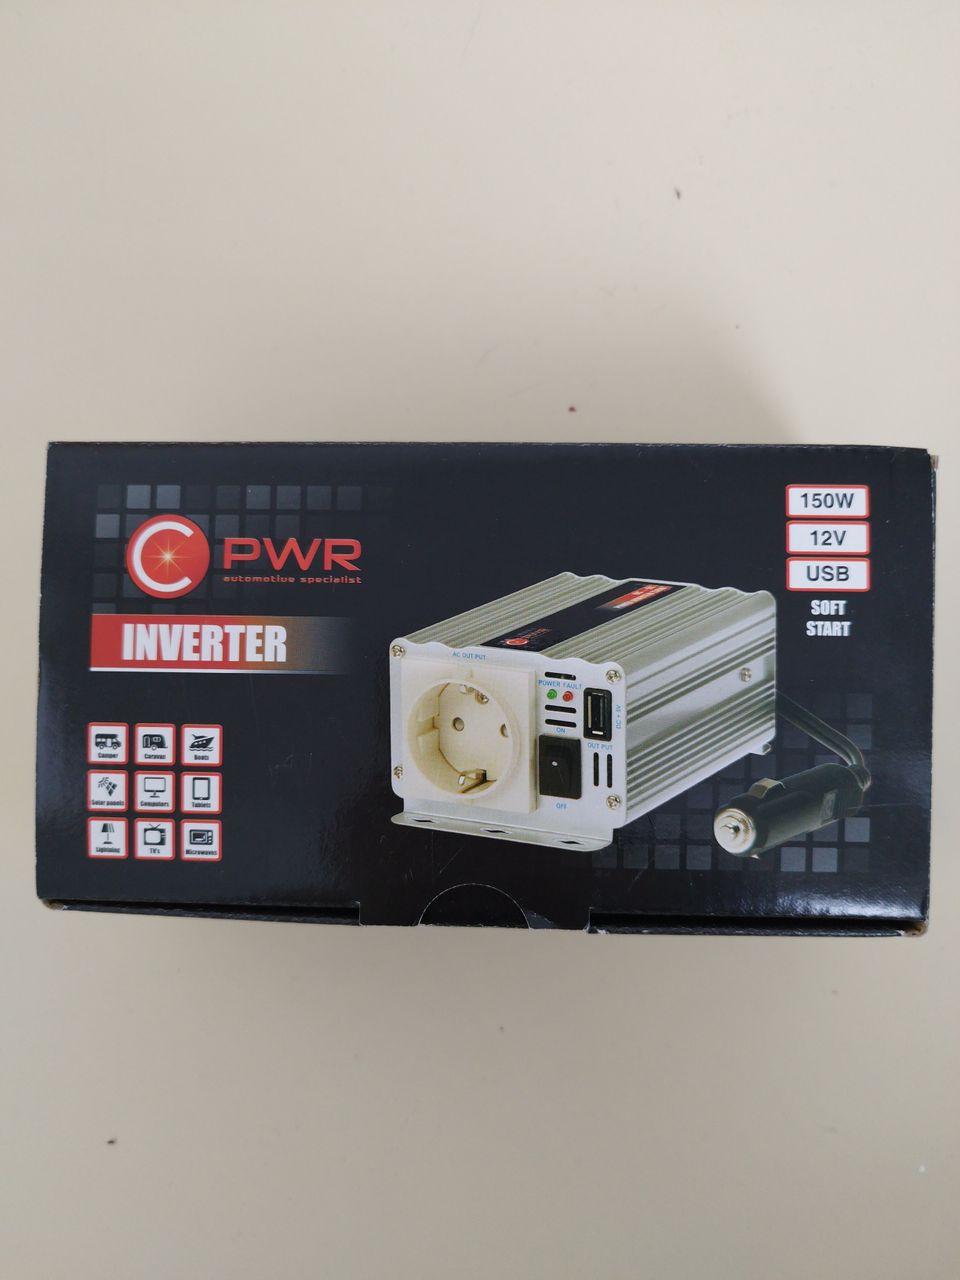 PWR Inverter 12V 150W USB